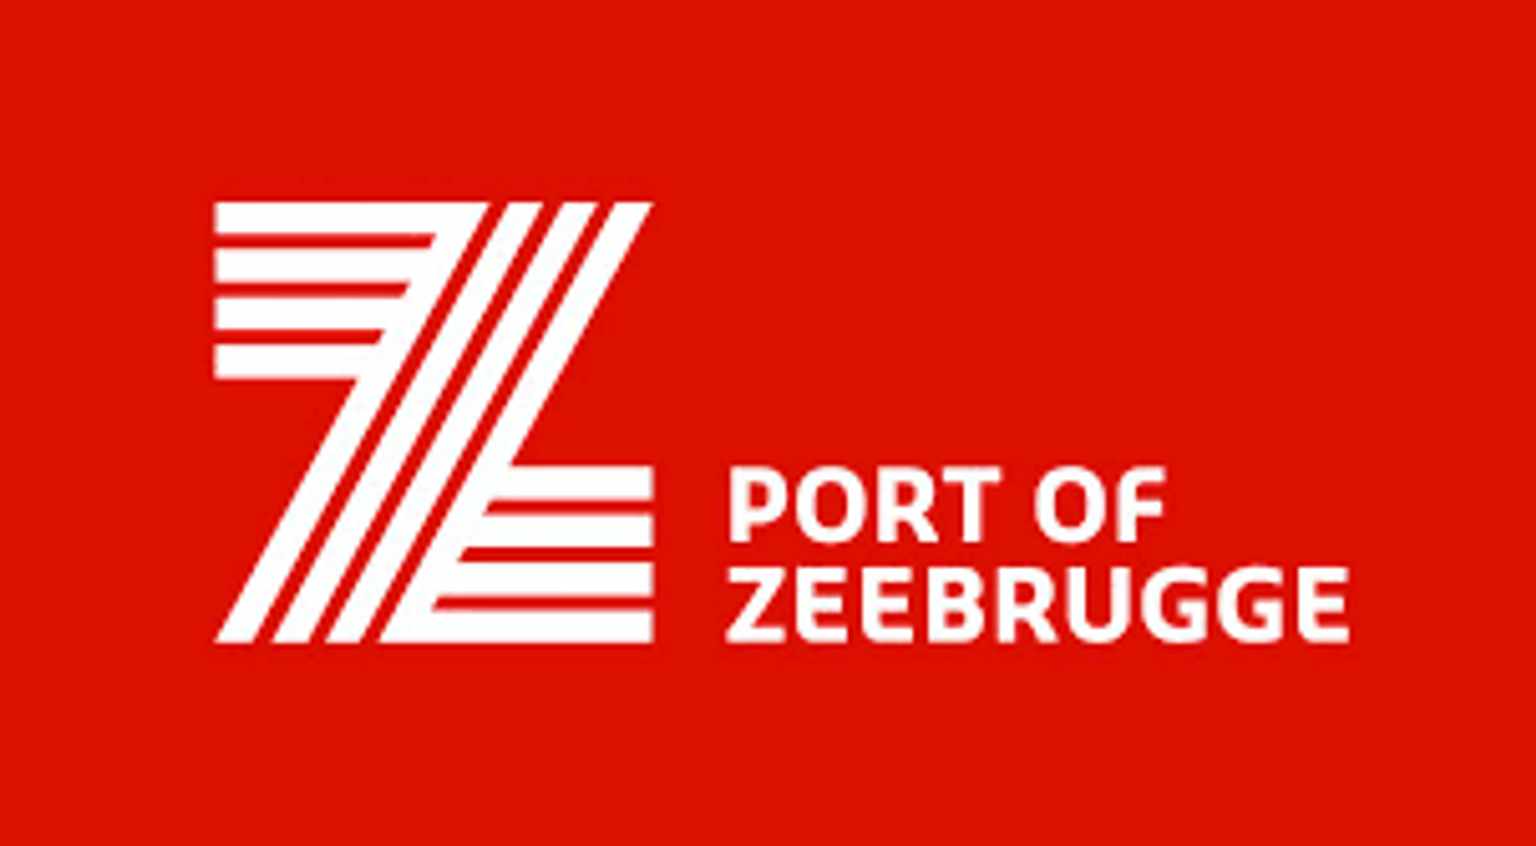 MBZ/ Port of Zeebrugge